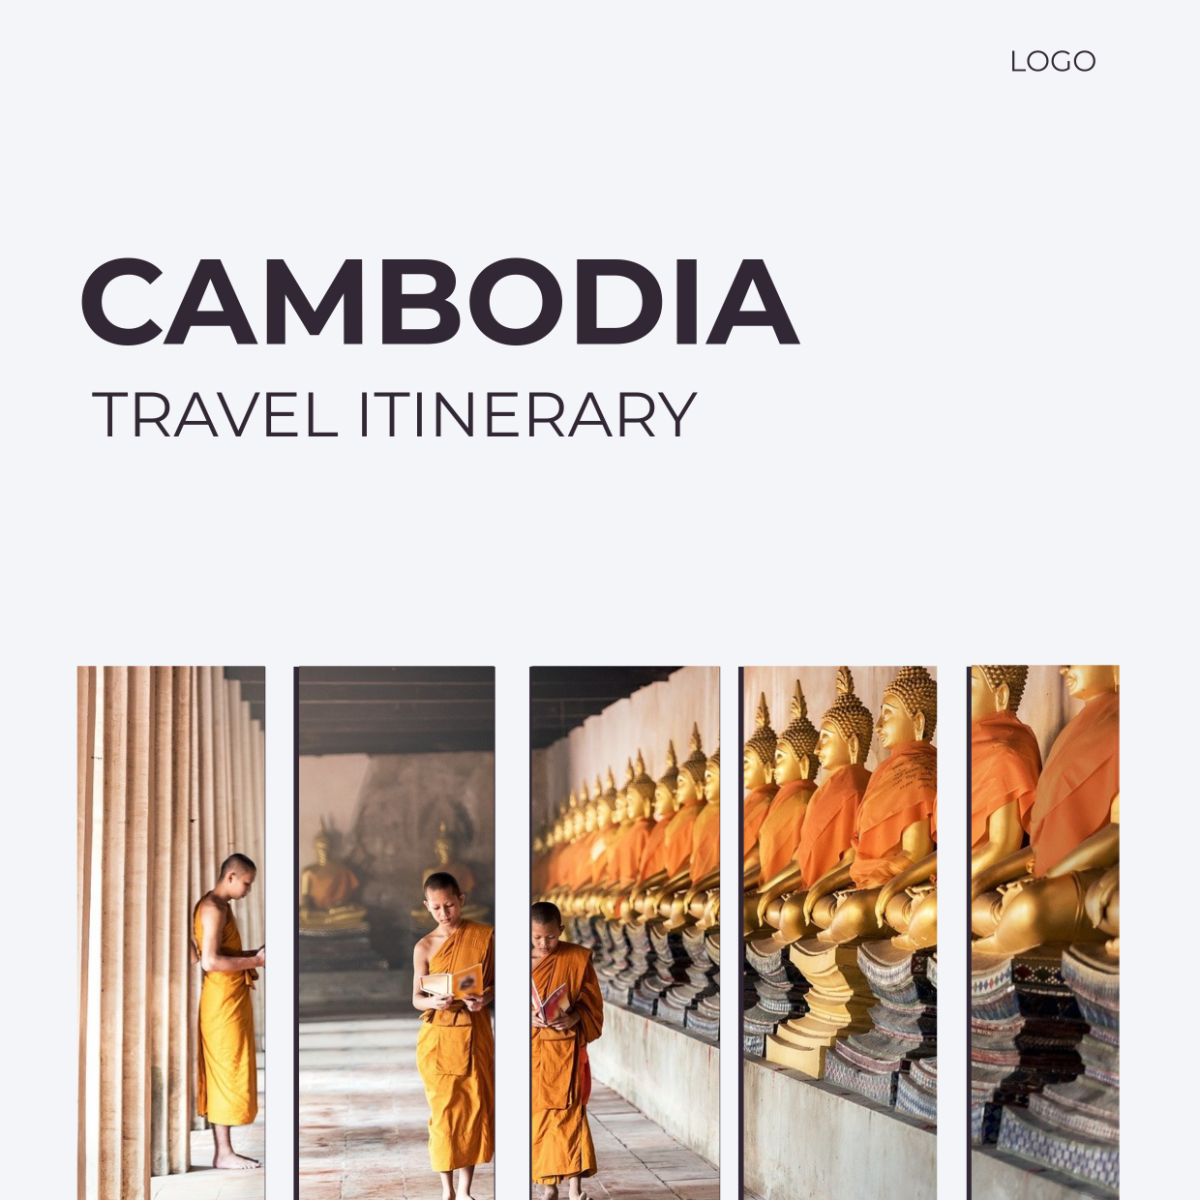 Cambodia Travel Itinerary Template